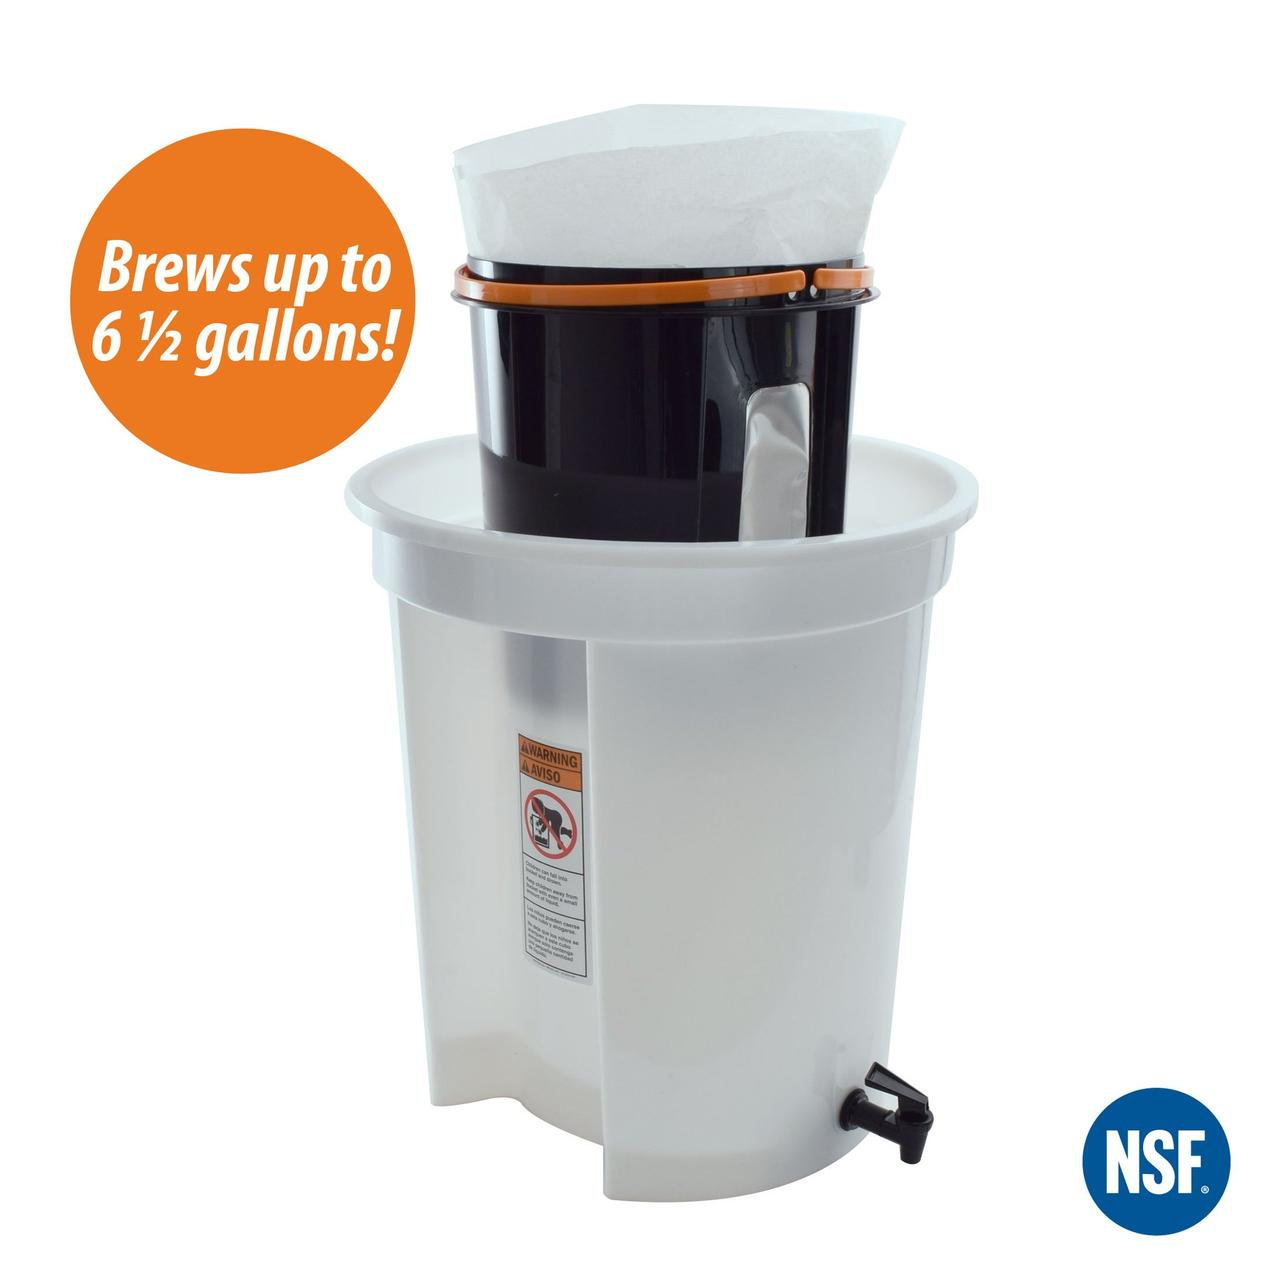 Cold Pro 2 Commercial Brewing System - Complete Kit Набор Для Производства Холодного Кофе